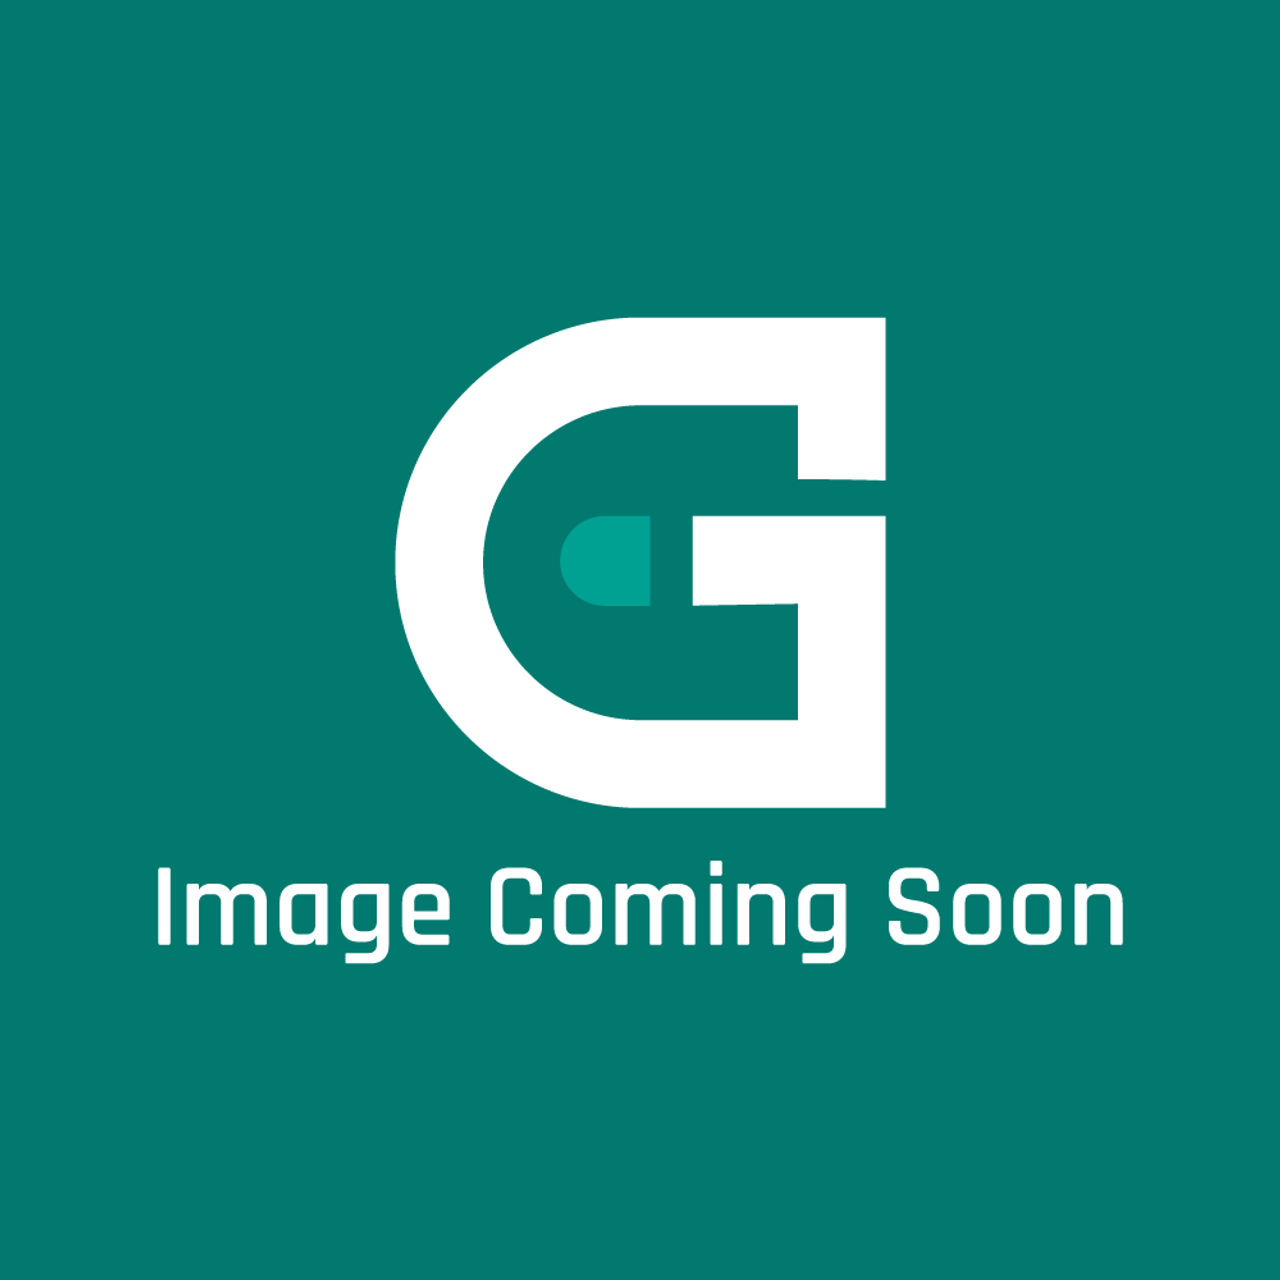 GE Appliances WR01X36301 - Odor Filter Cartridge 220V - Image Coming Soon!